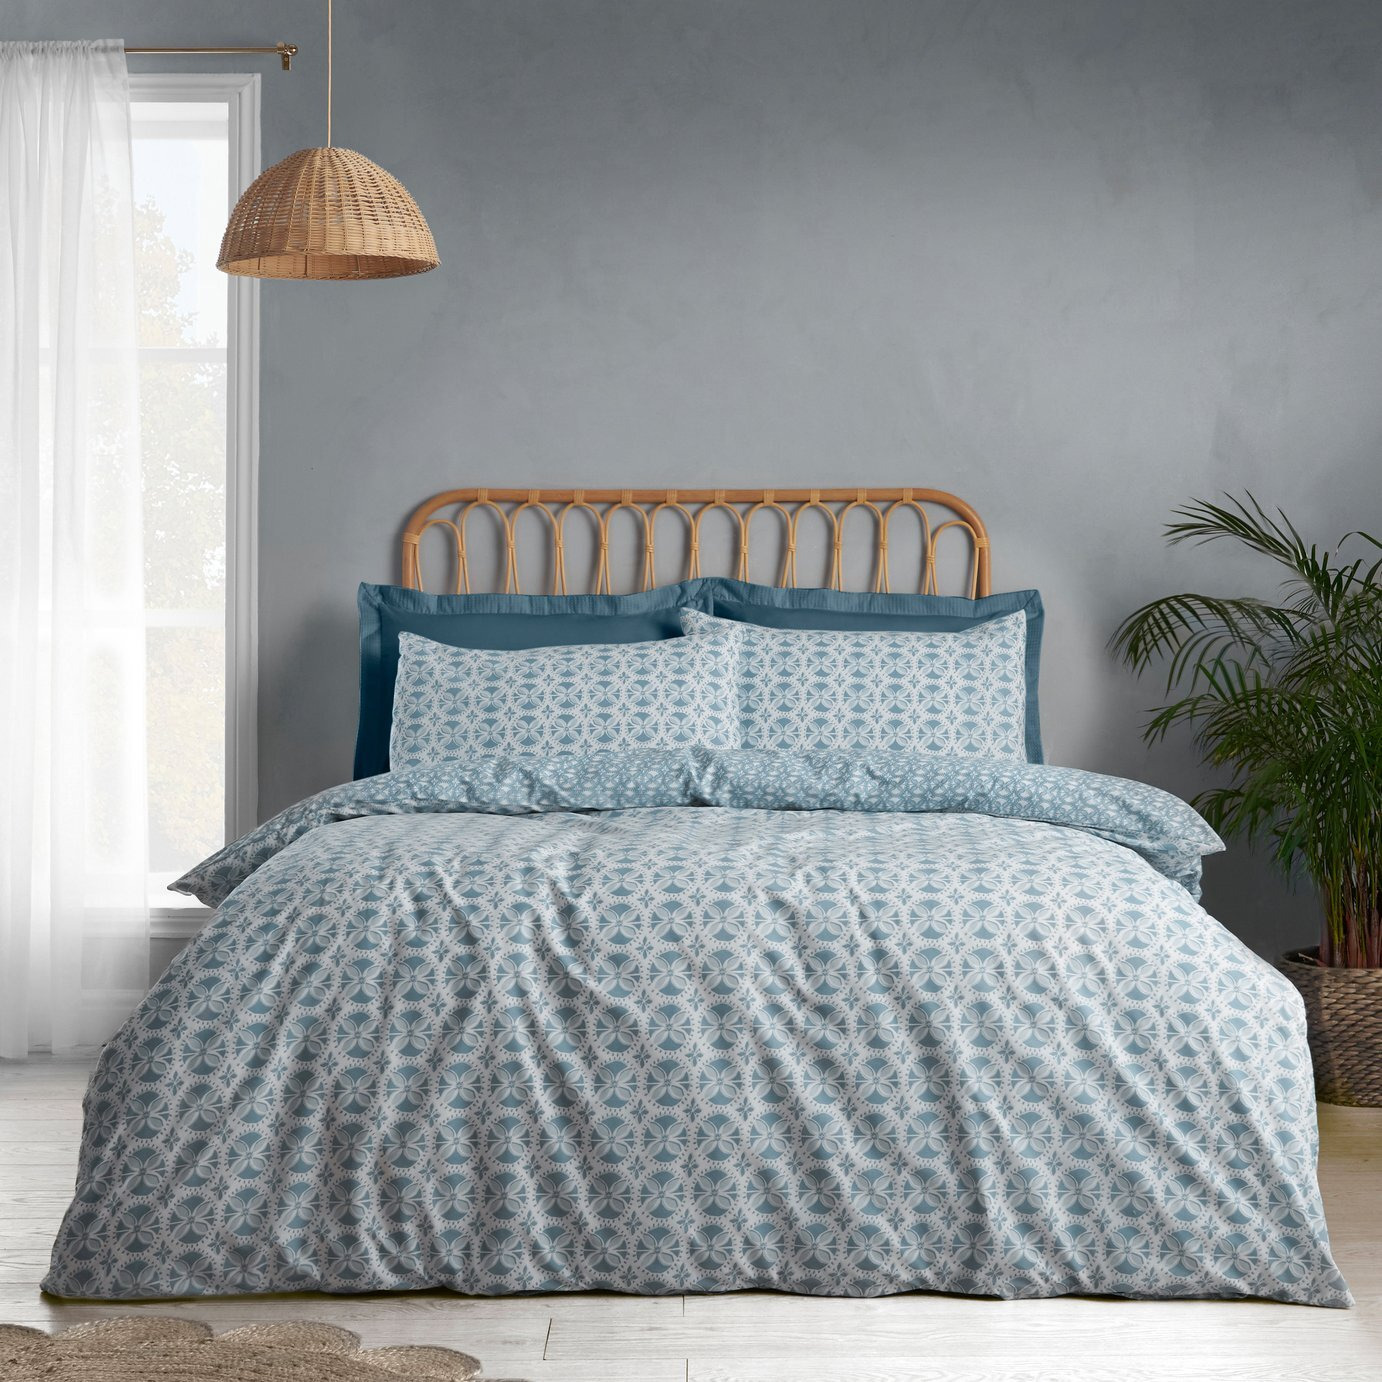 Catherine Lansfield Sardinia Tile Blue Bedding Set - King - image 1